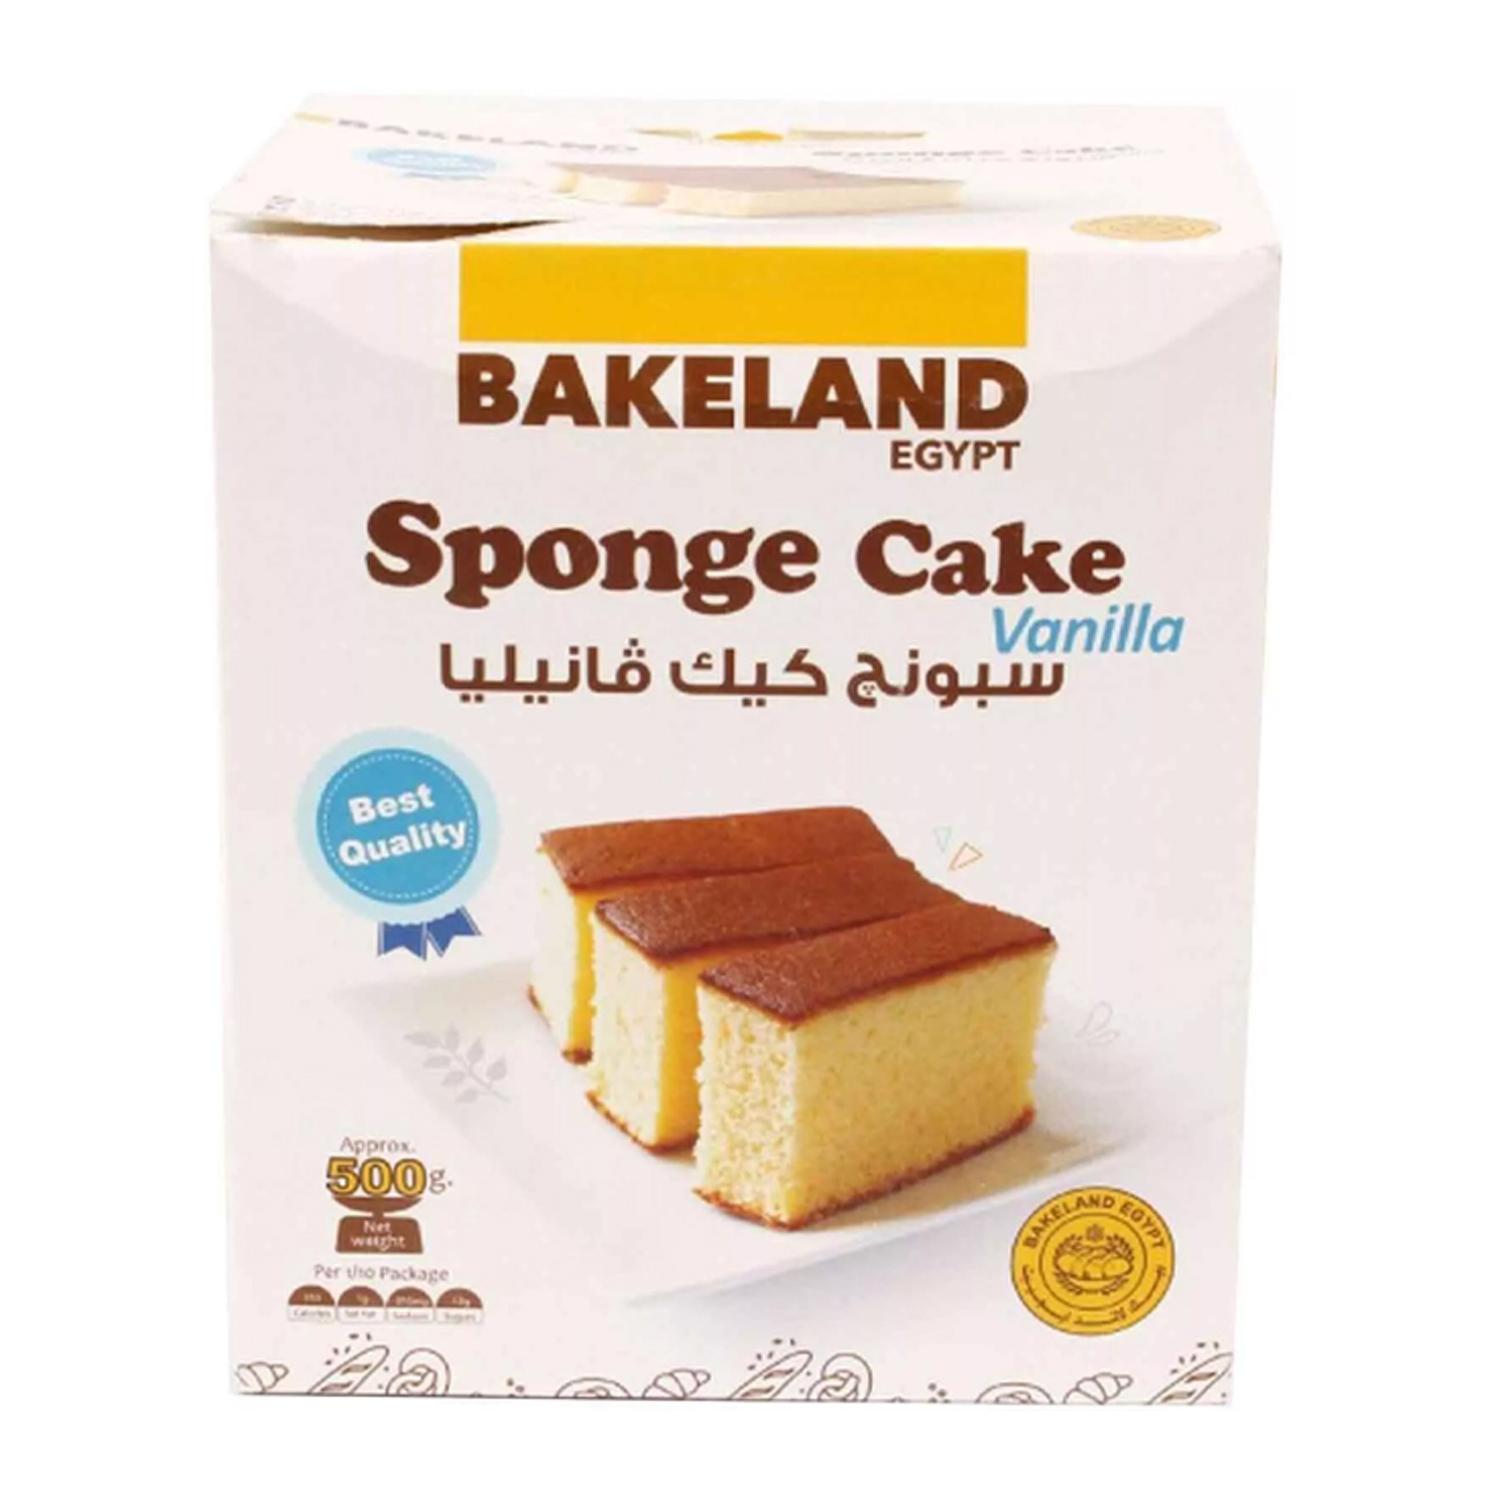 BAKELAND BLONDY VANILLA SPONGE CAKE MIX 500GMS